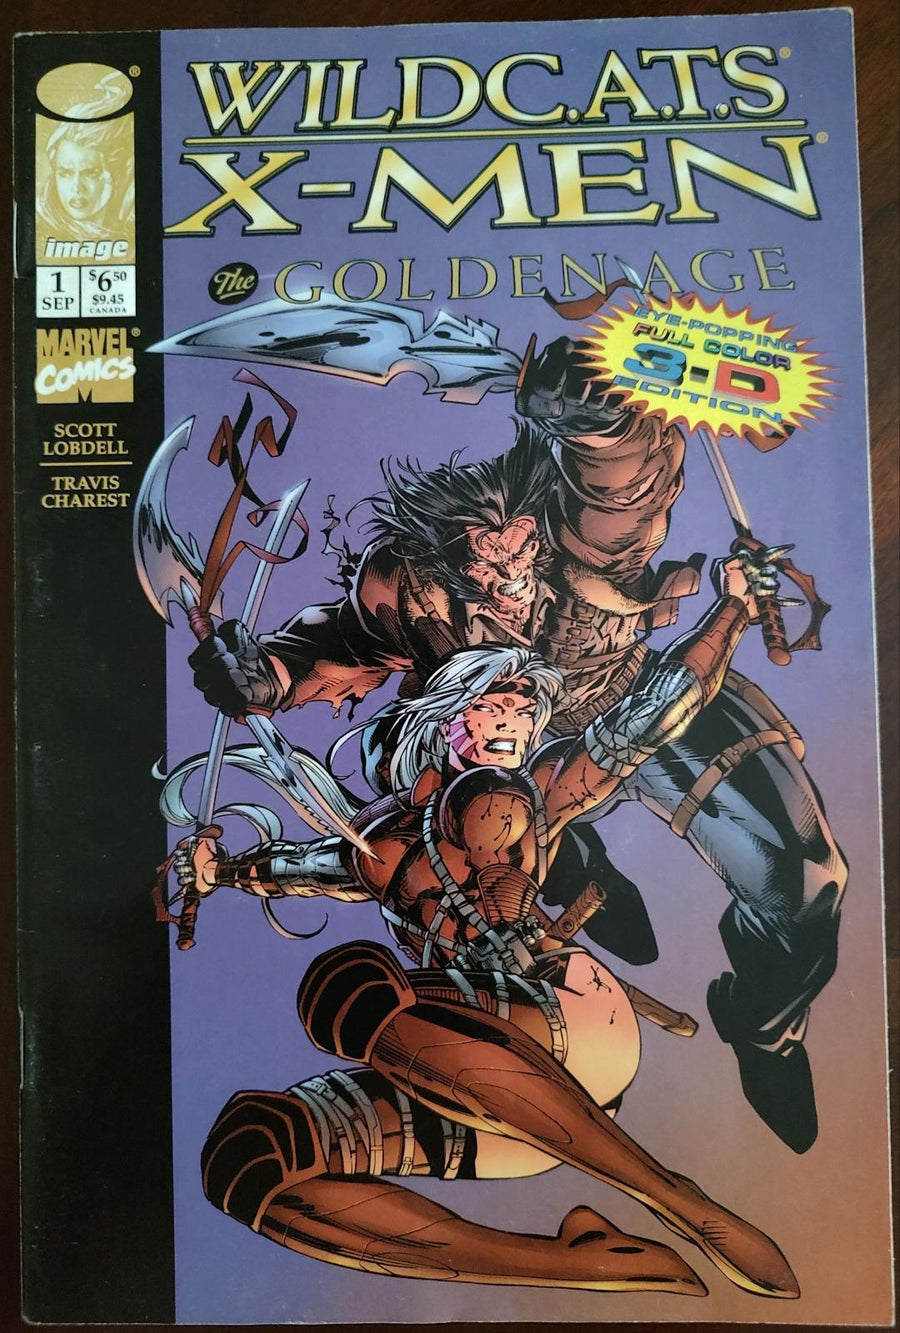 WildC.A.T.S X-Men The Golden Age #1 Comic Book